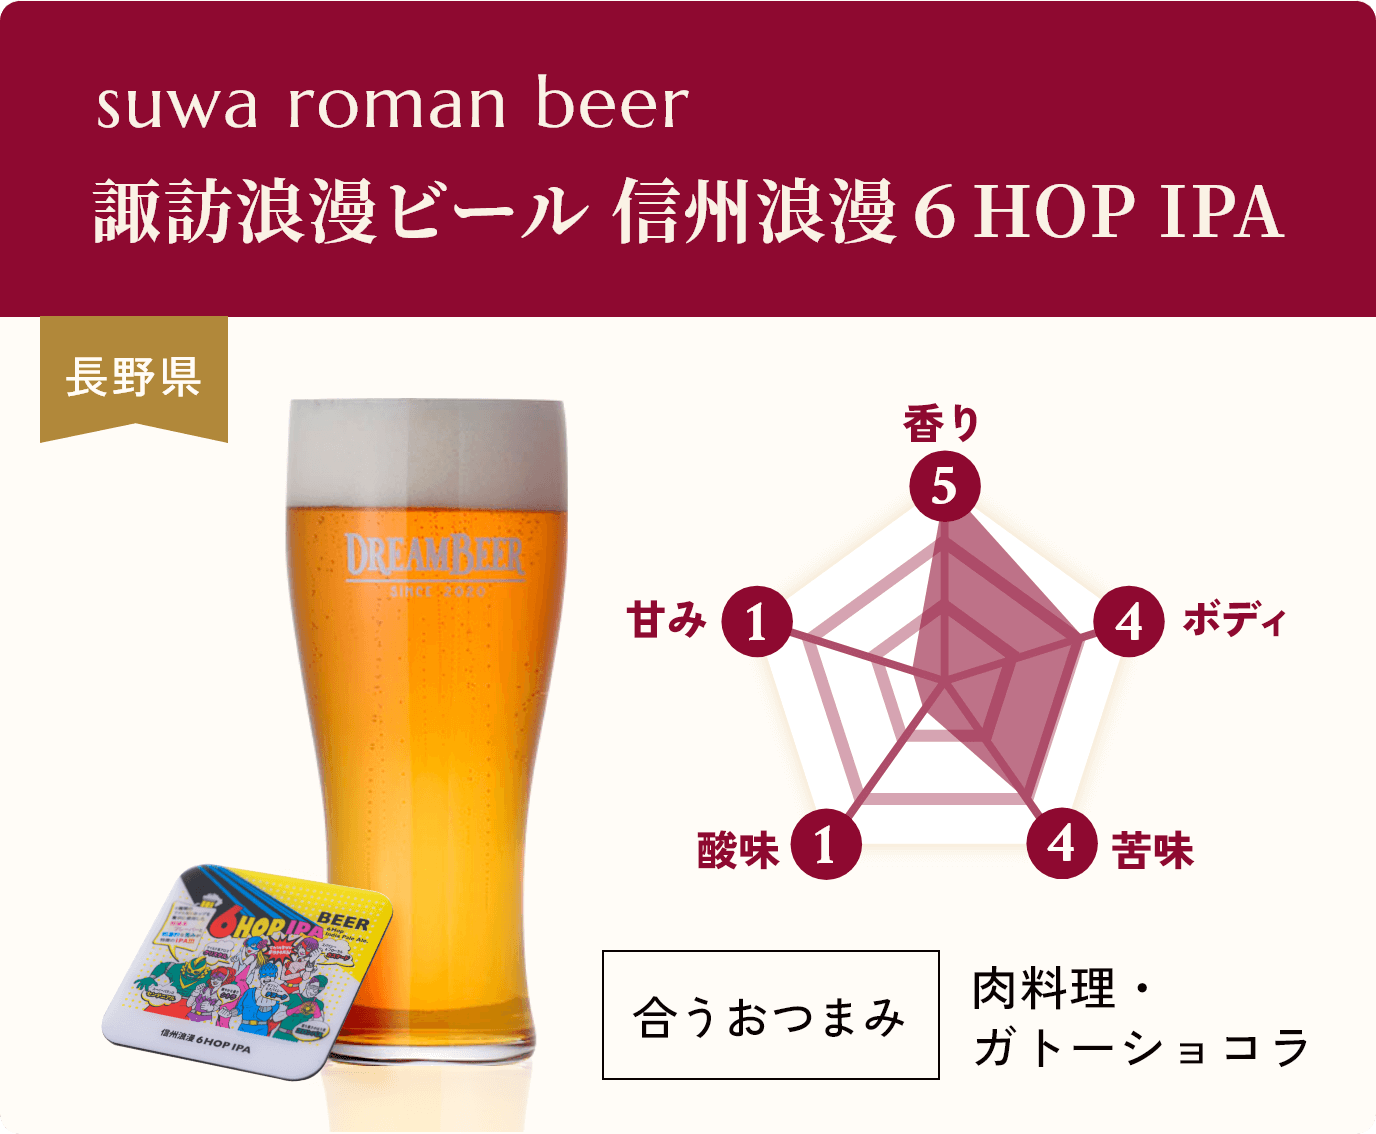 suwa roman beer,諏訪浪漫ビール 信州浪漫６HOP IPA